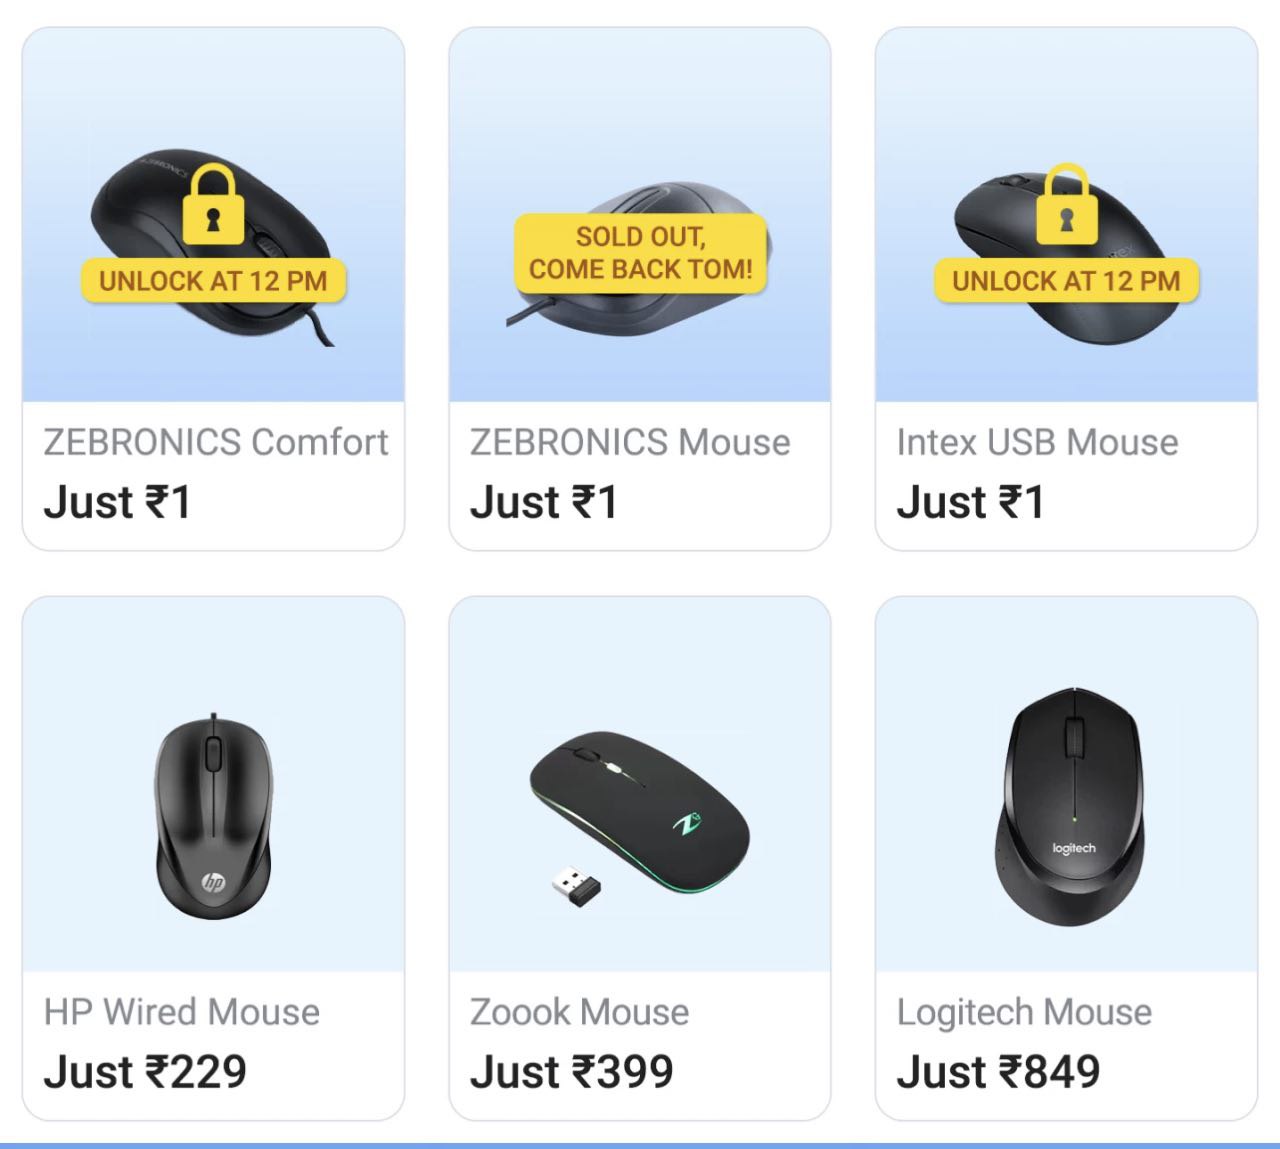 Flipkart ₹1 Loot - Get Zebronics & Intex Mouse @ Just ₹1 Only | Sale Today